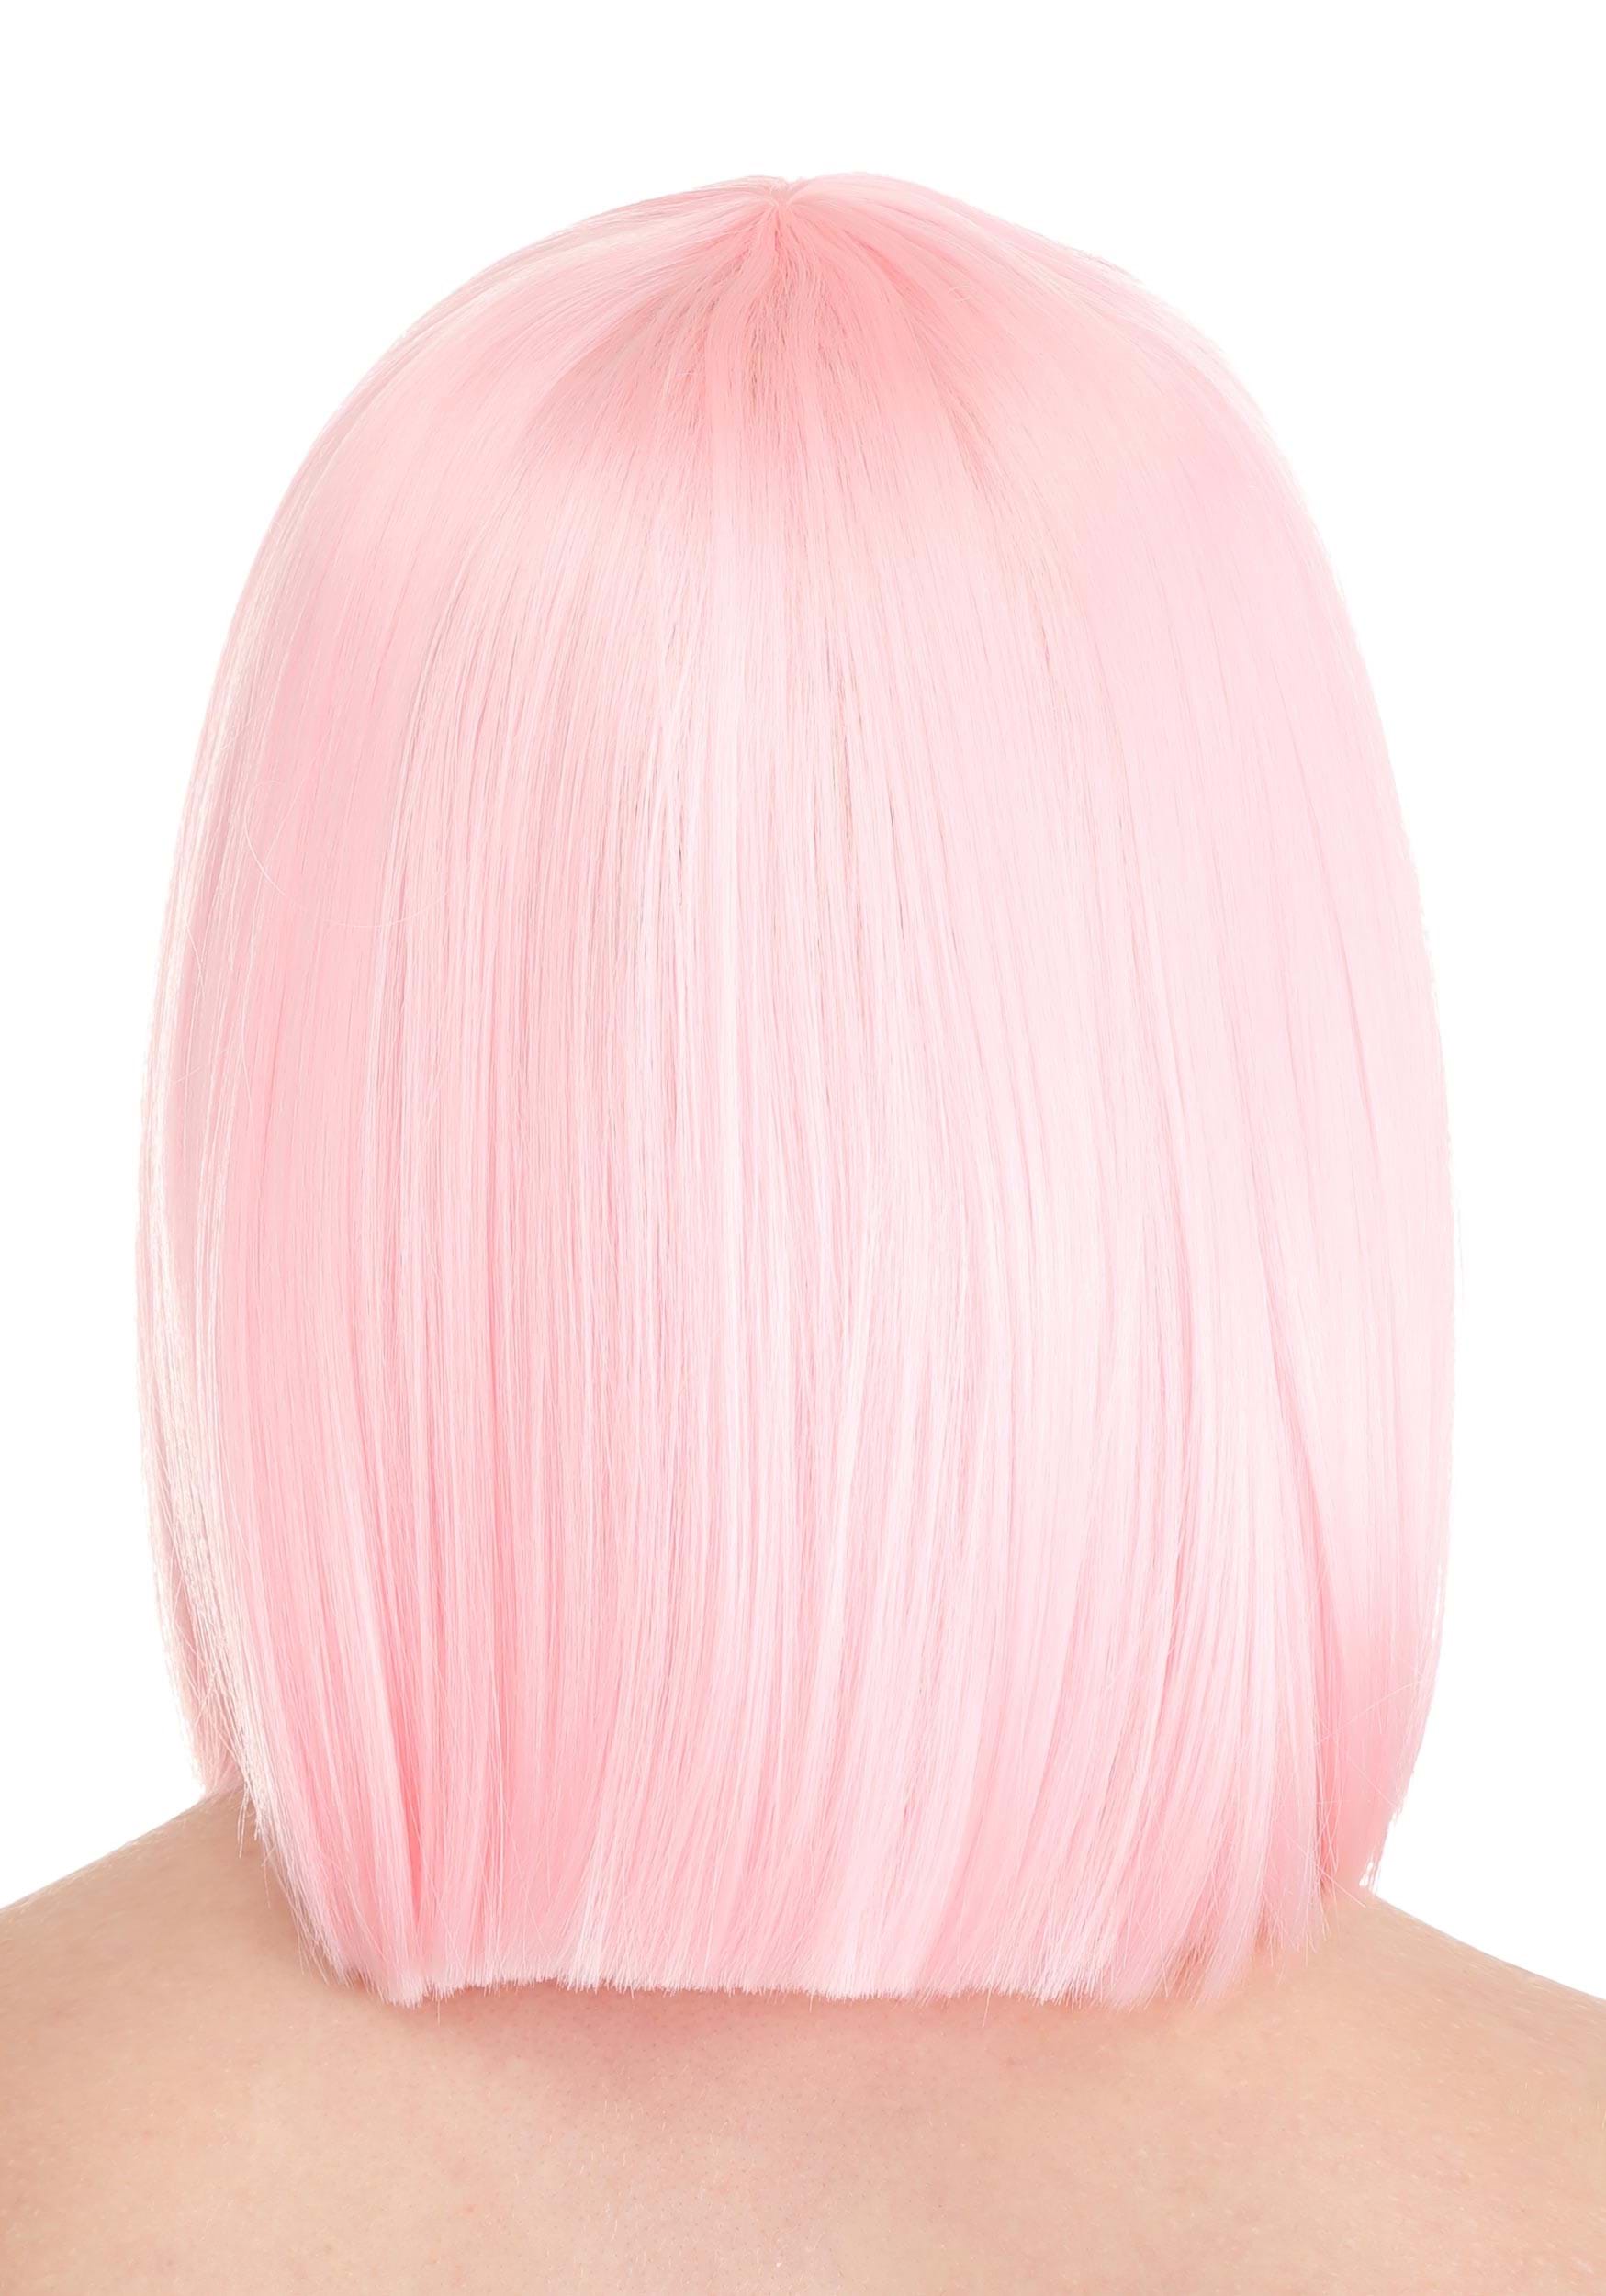 Adult Light Pink Bob Wig